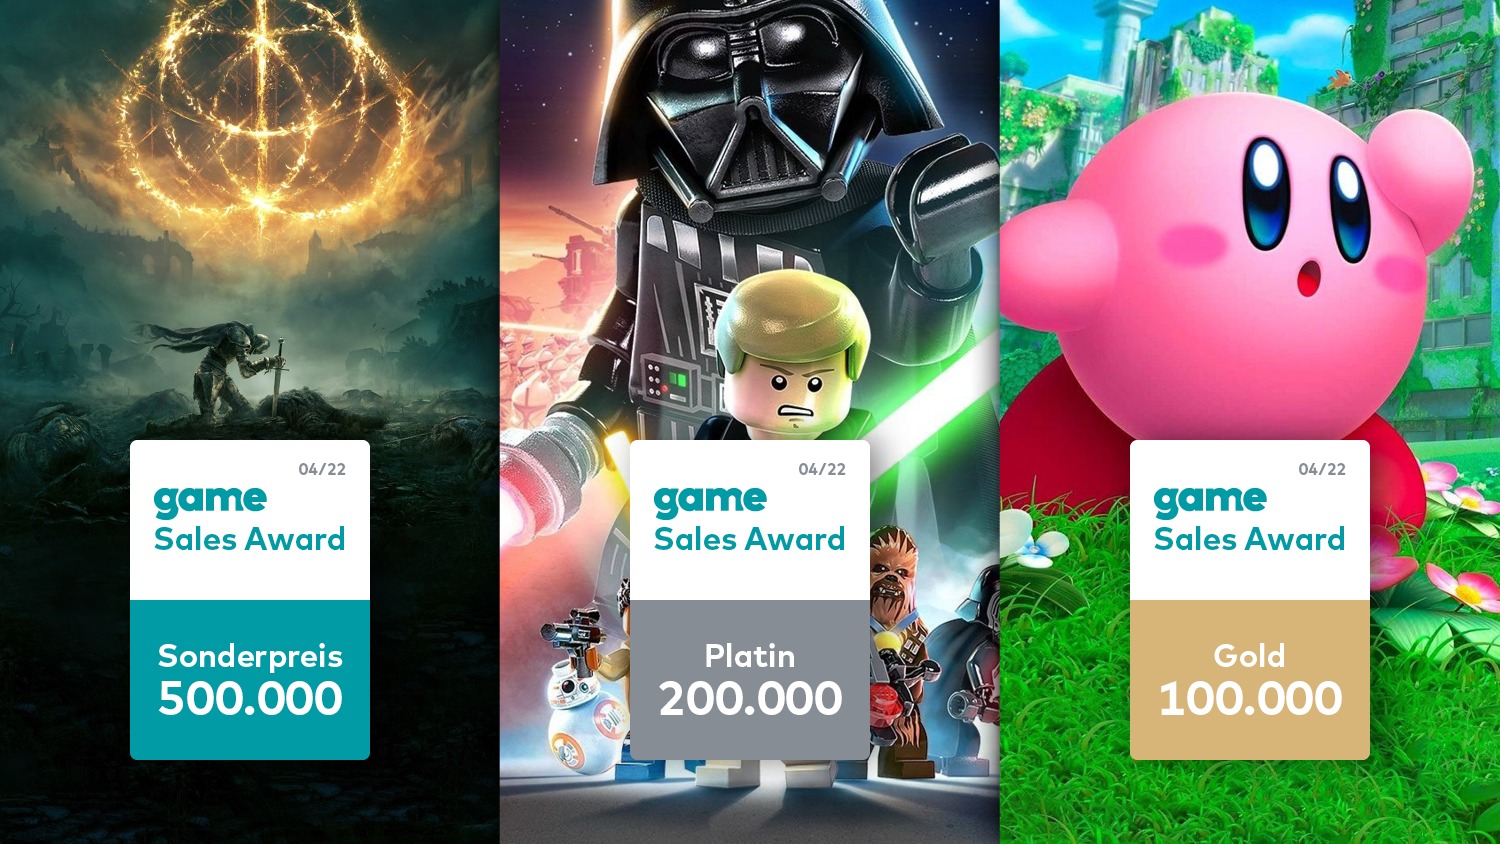 game Sales Awards April 2022